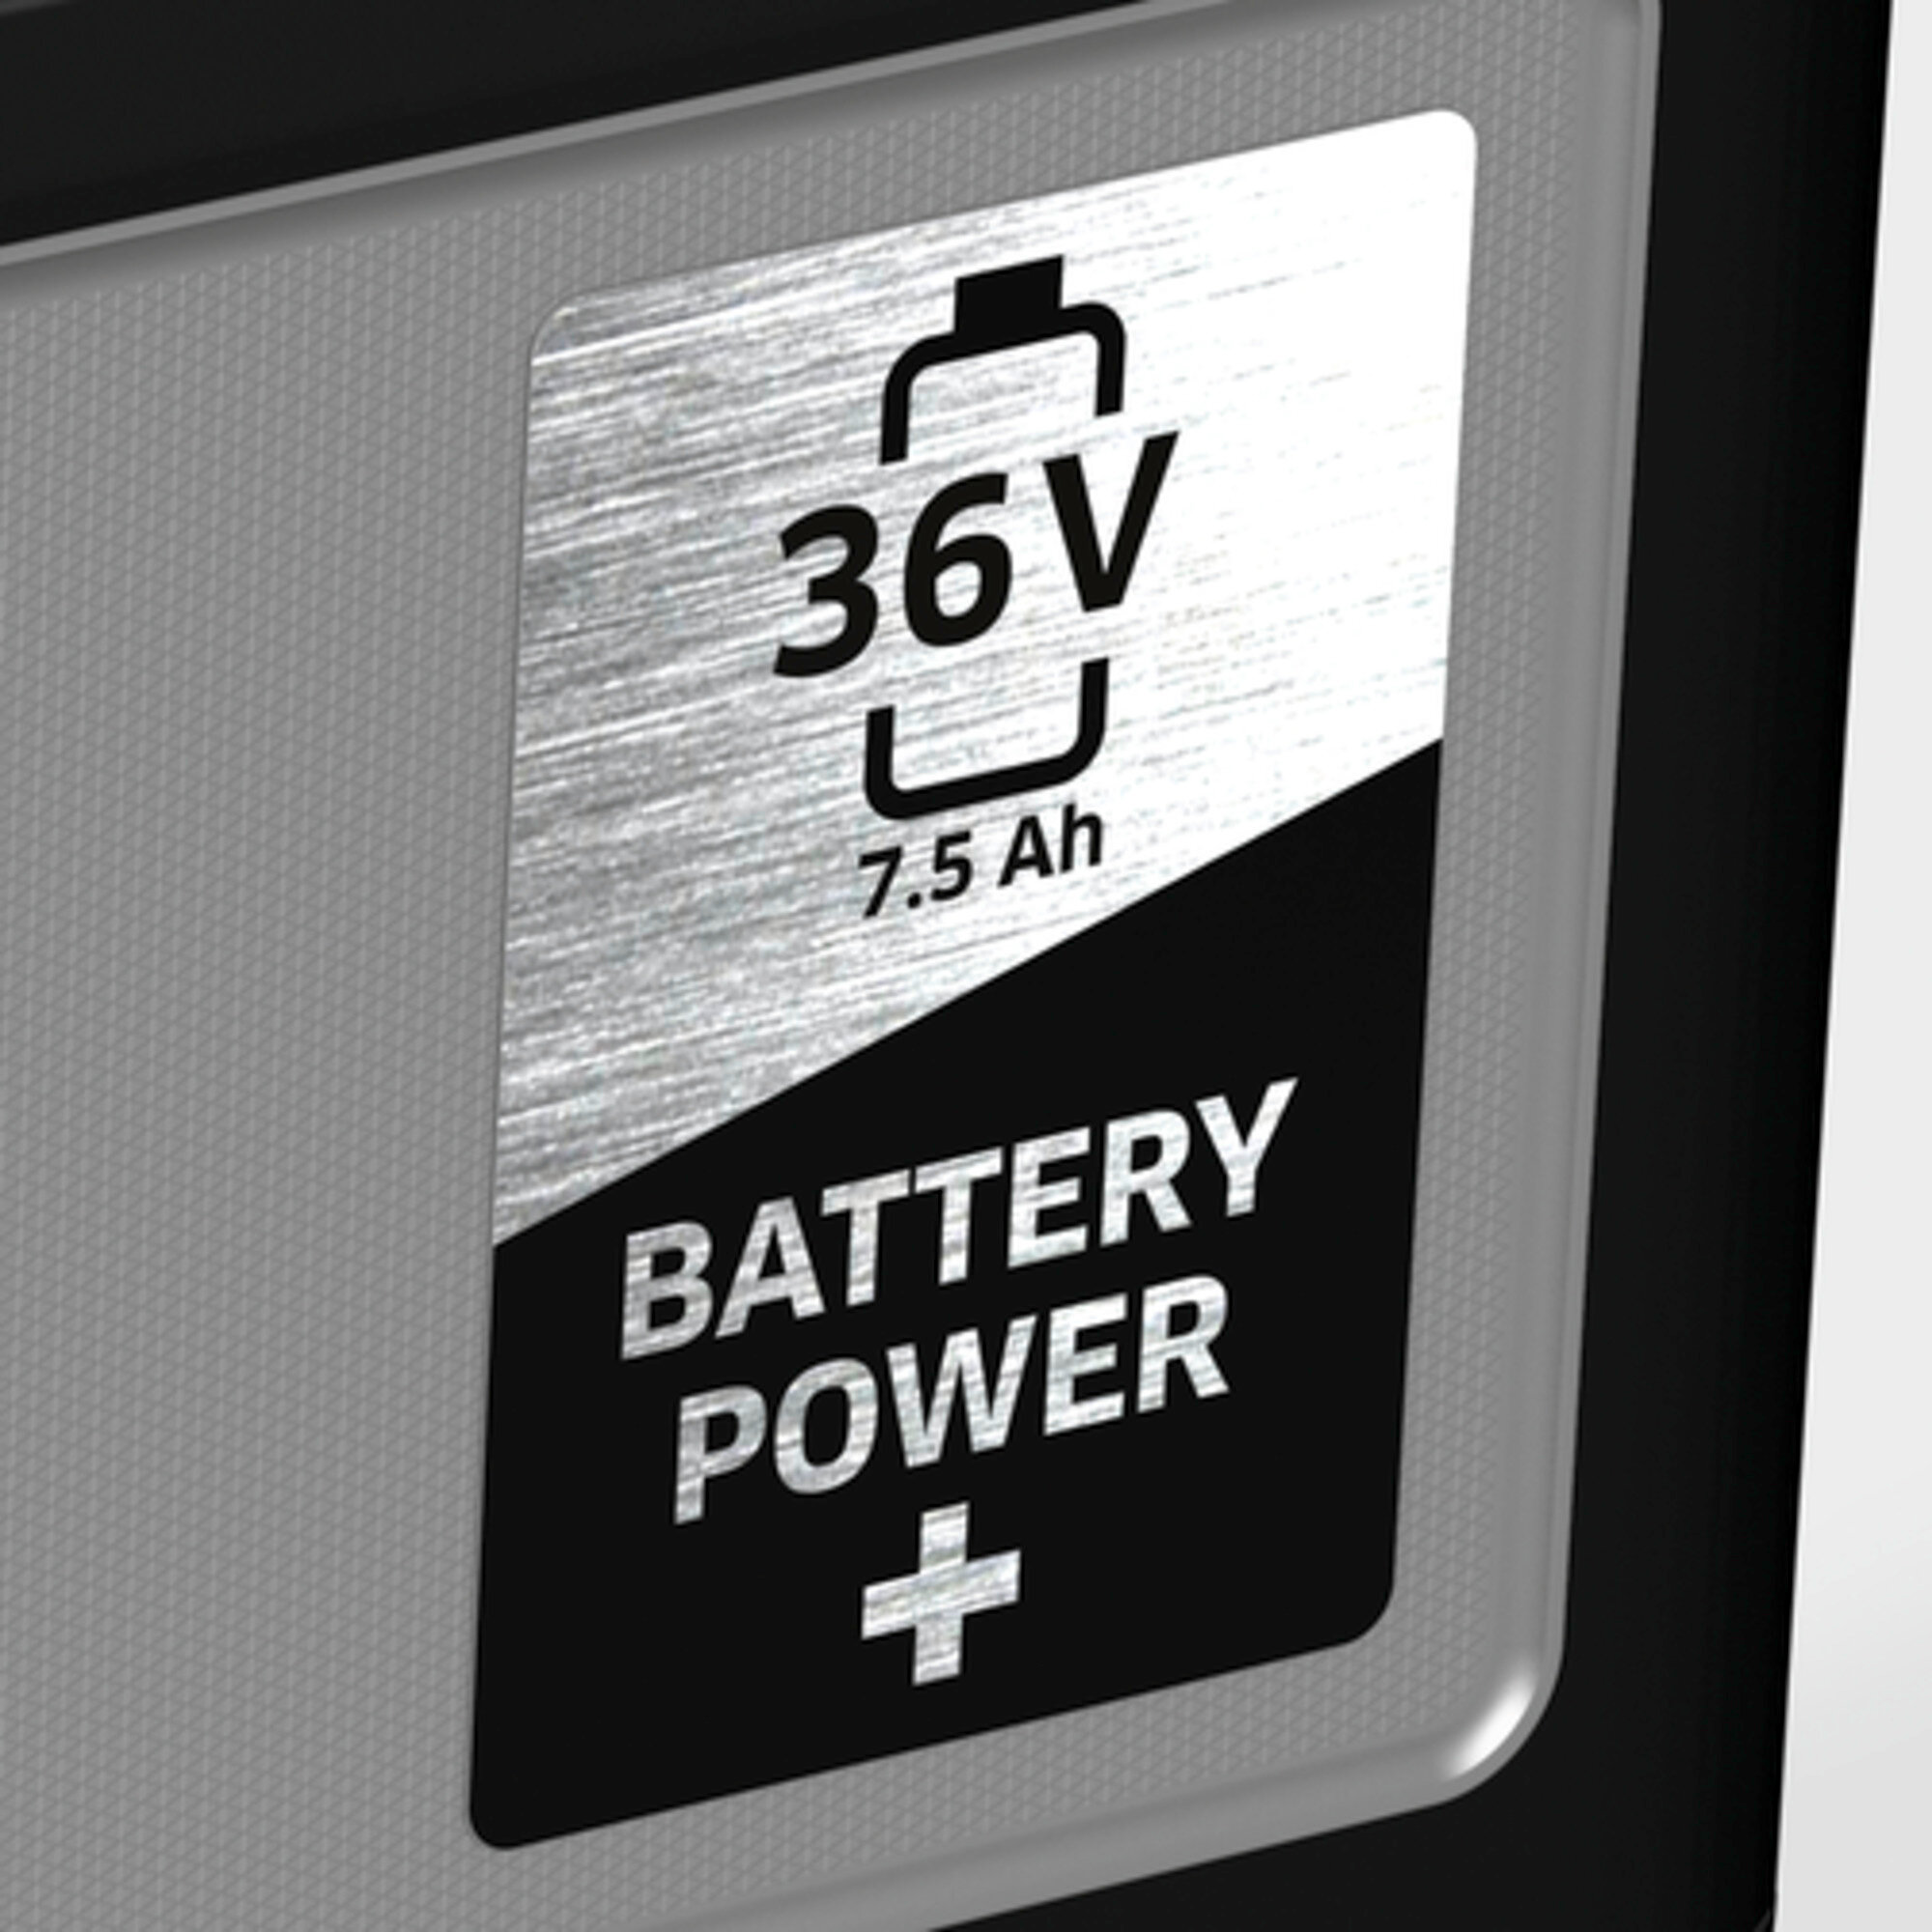  Battery Power + 35/75: 36 V Battery Power akkumulátorplatform